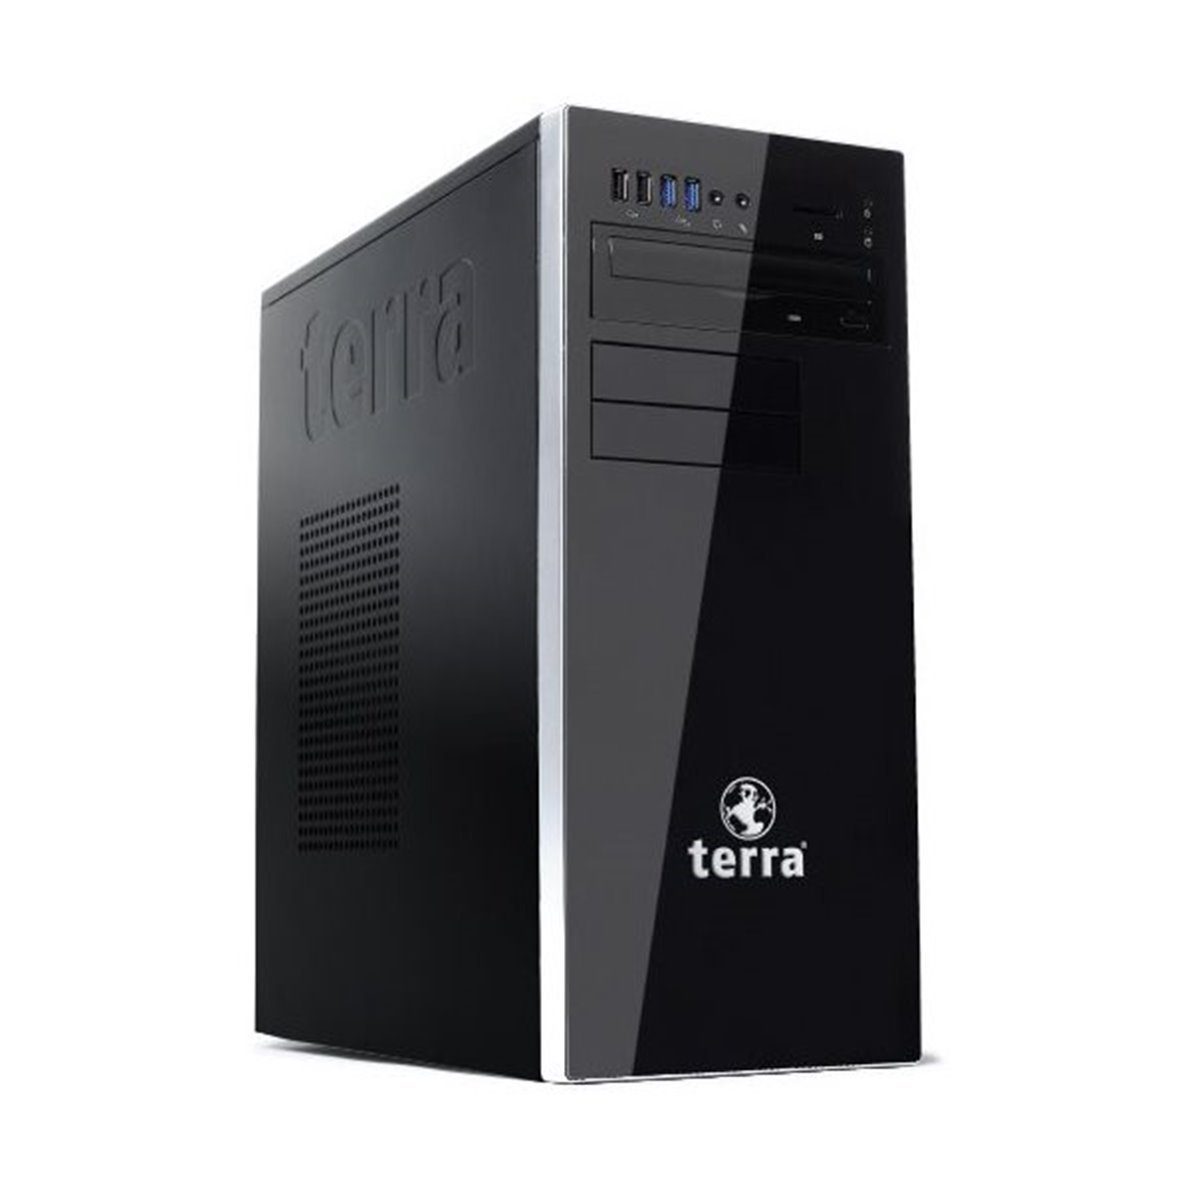 TERRA 6000 1 vorne)/ (2x 4x 11400, (1130 PC Type-A) RAM, GB Graphics USB ports (alle (2x UHD vorne), Home 2.0 USB 500 6x 3.2 Core ports SSD), Intel (Intel Gen GB 730 i5 MHz), 16